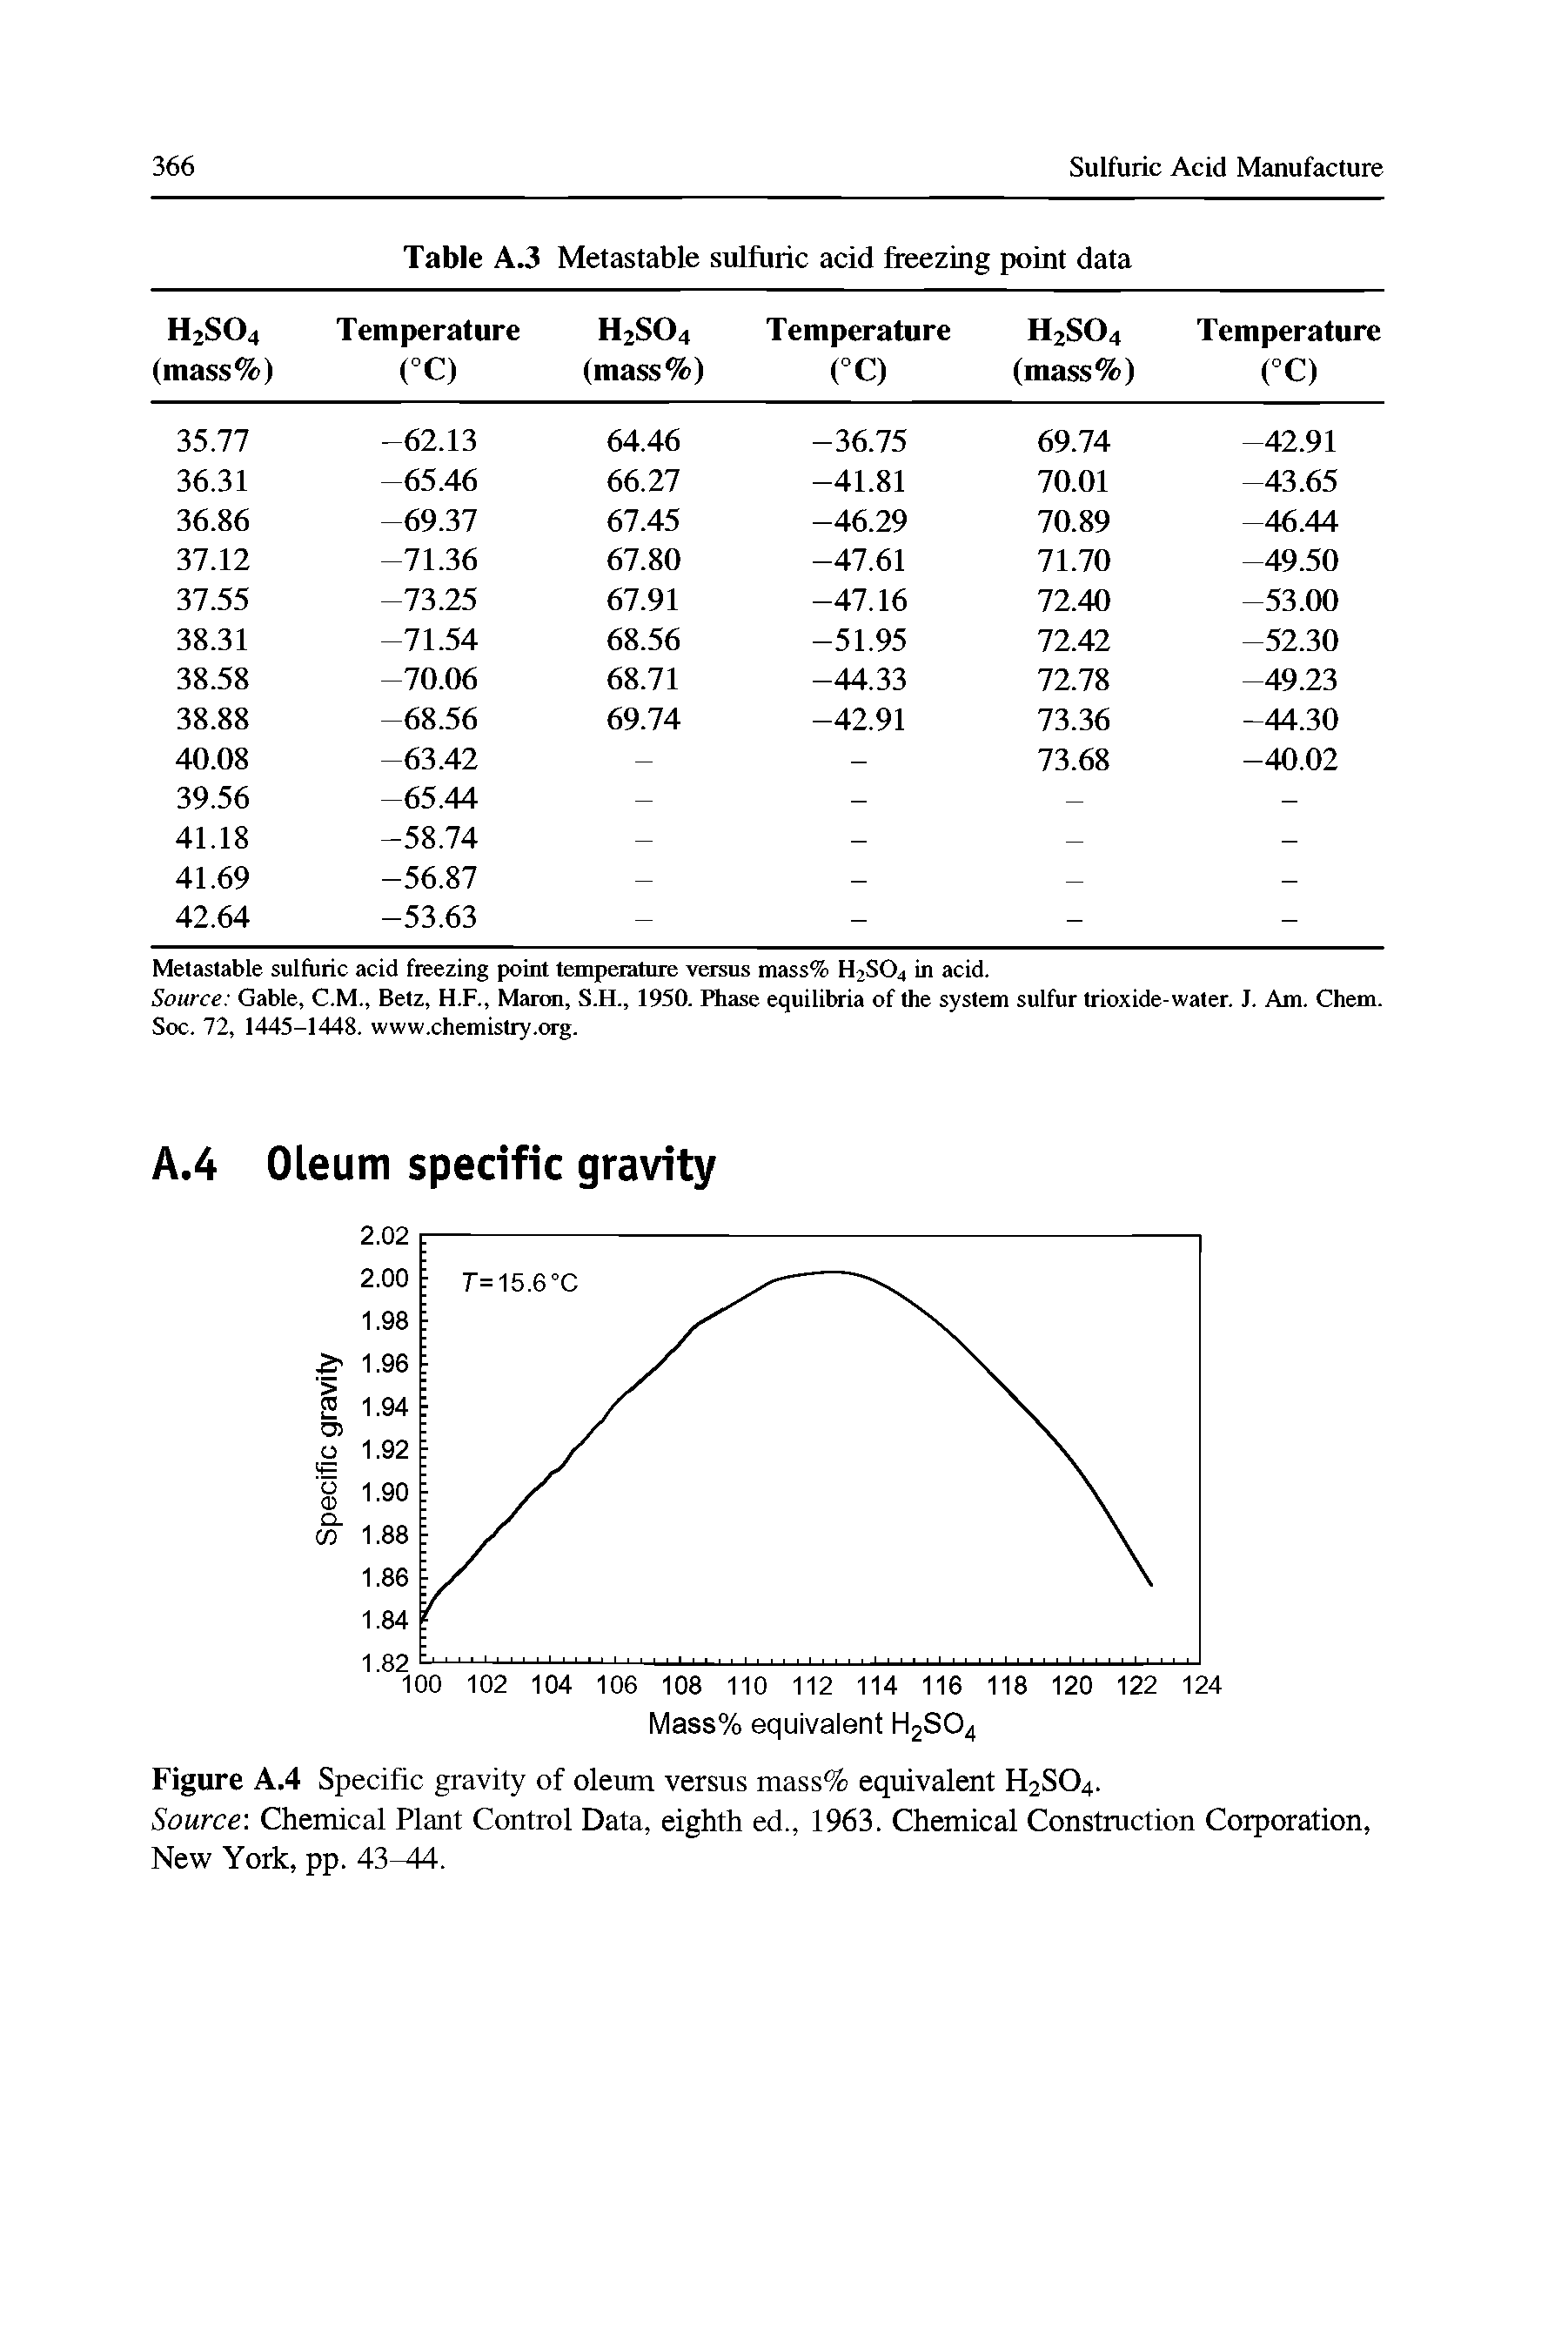 Figure A.4 Specific gravity of oleum versus mass% equivalent H2SO4.